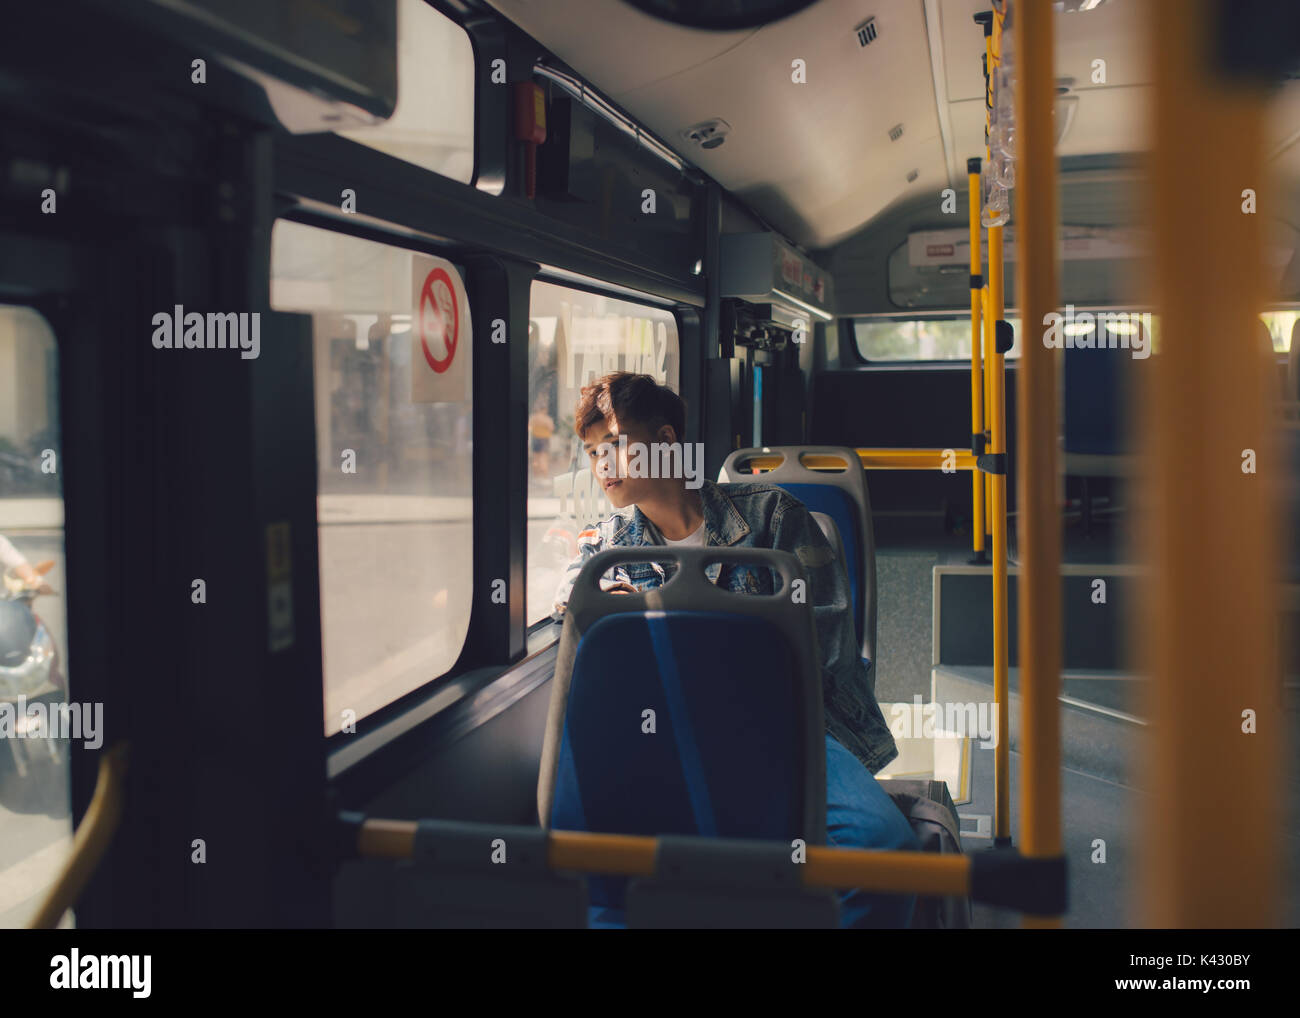 Asian man sitting dreaming on bus looking through window. Stock Photo